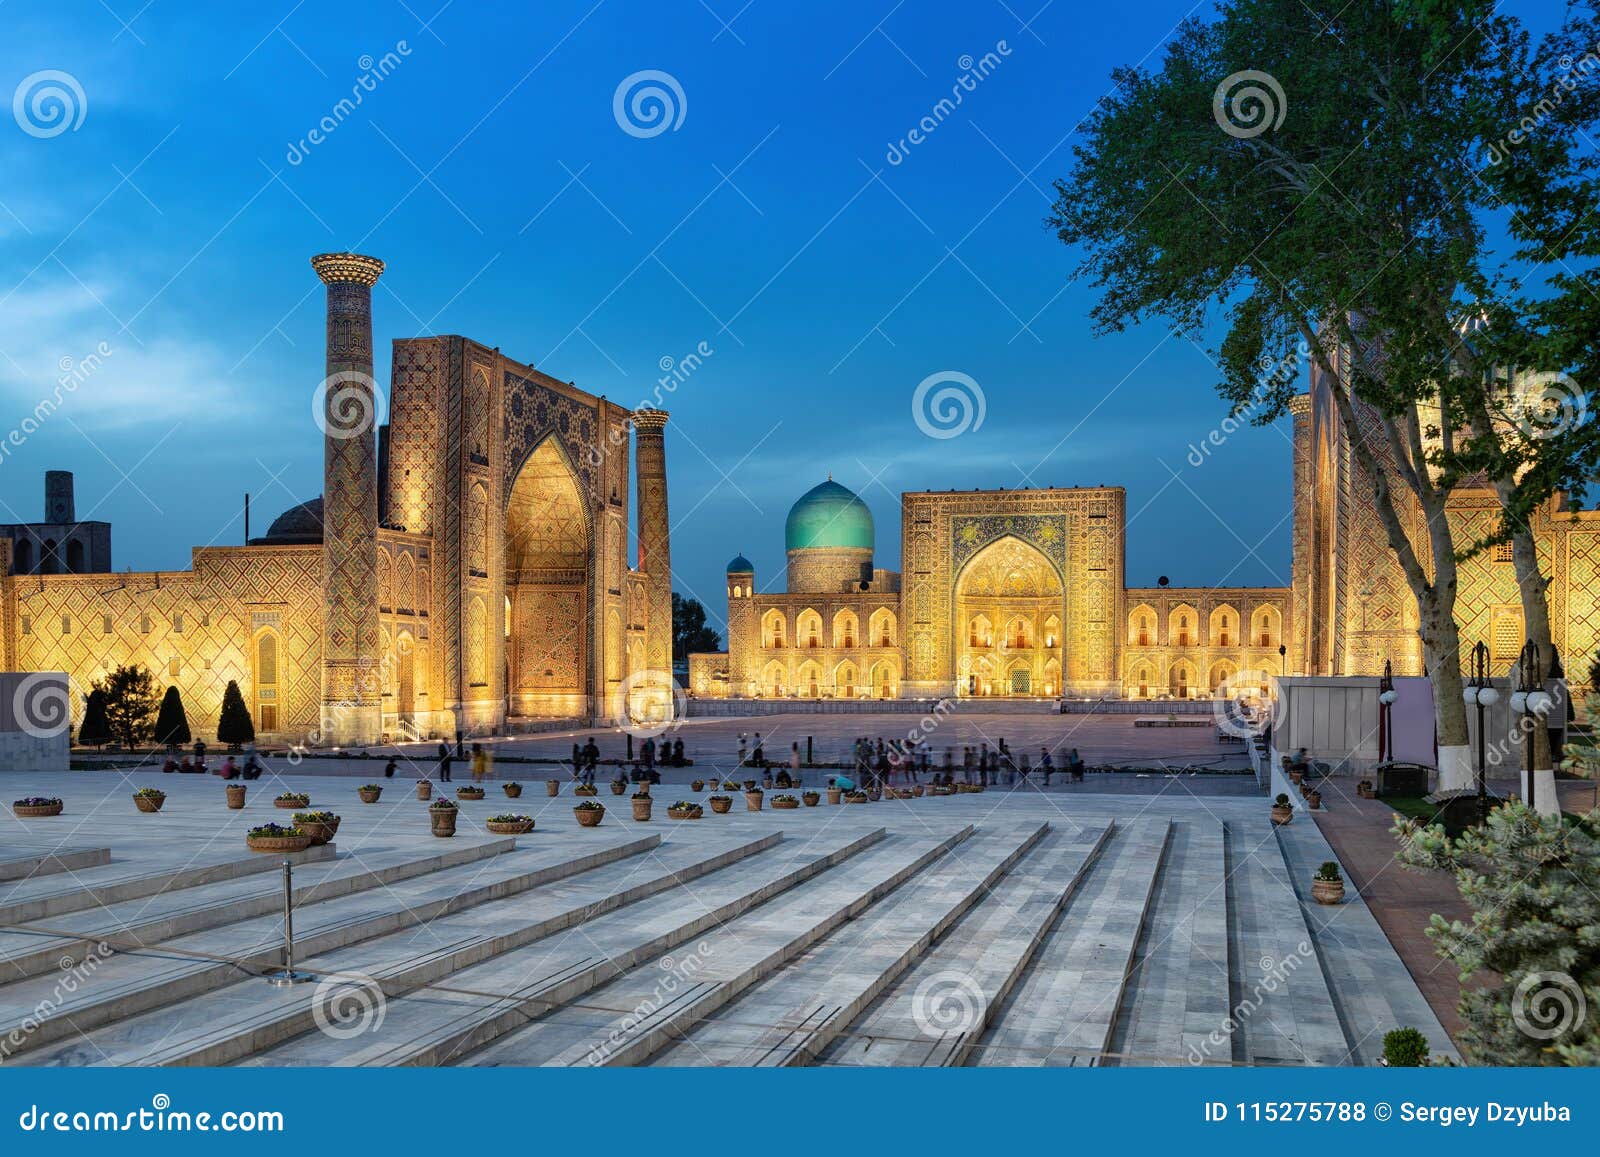 registan square at dusk in samarkand, uzbekistan